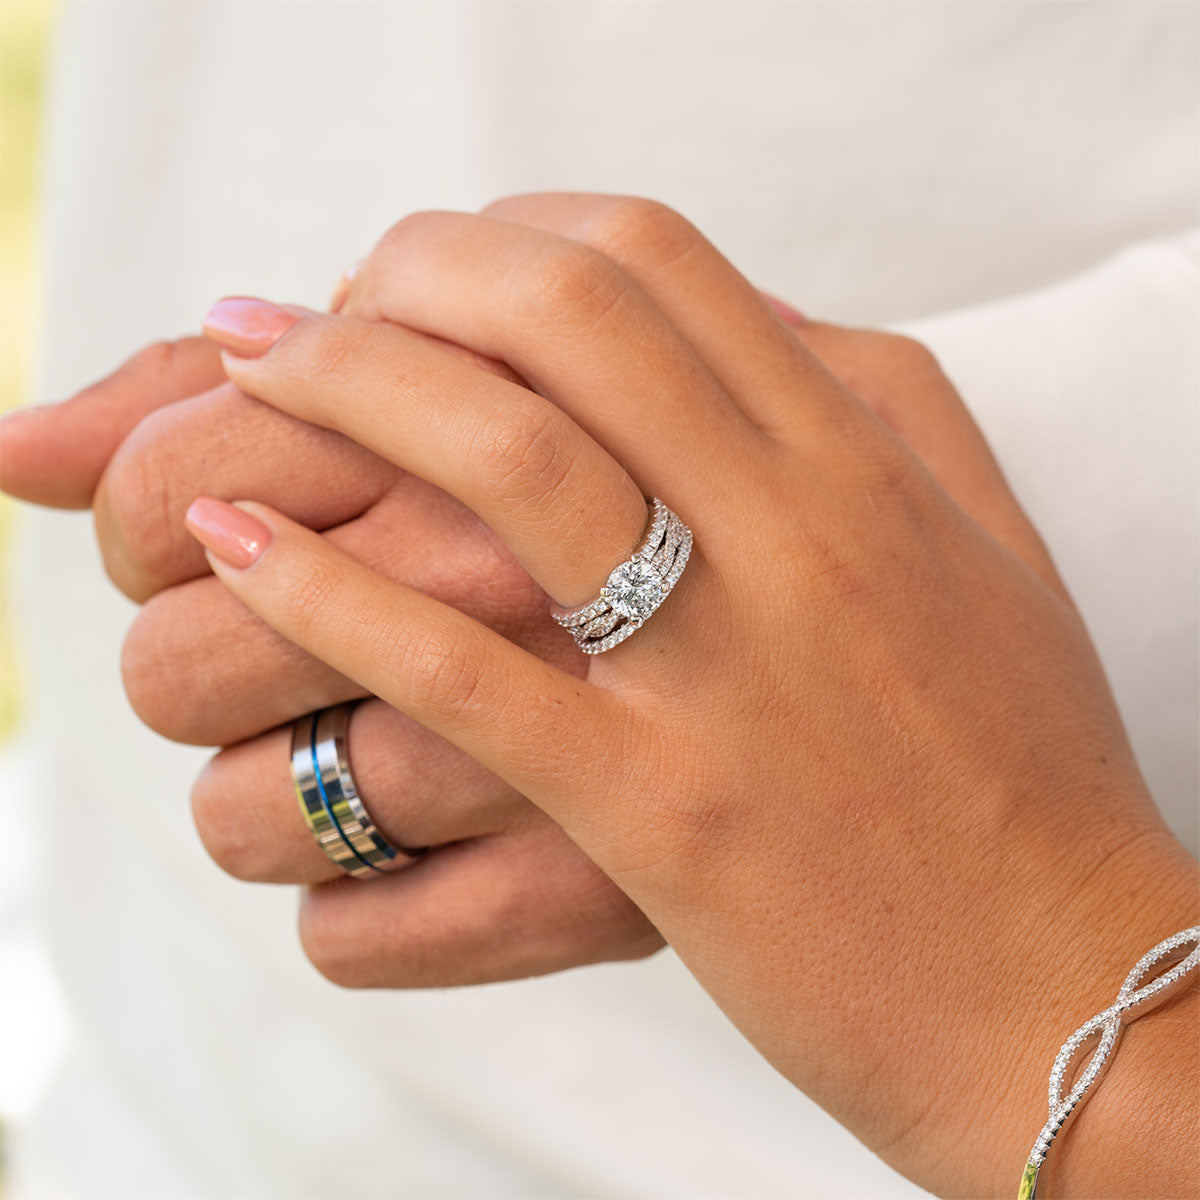 Couple wearing silver wedding rings